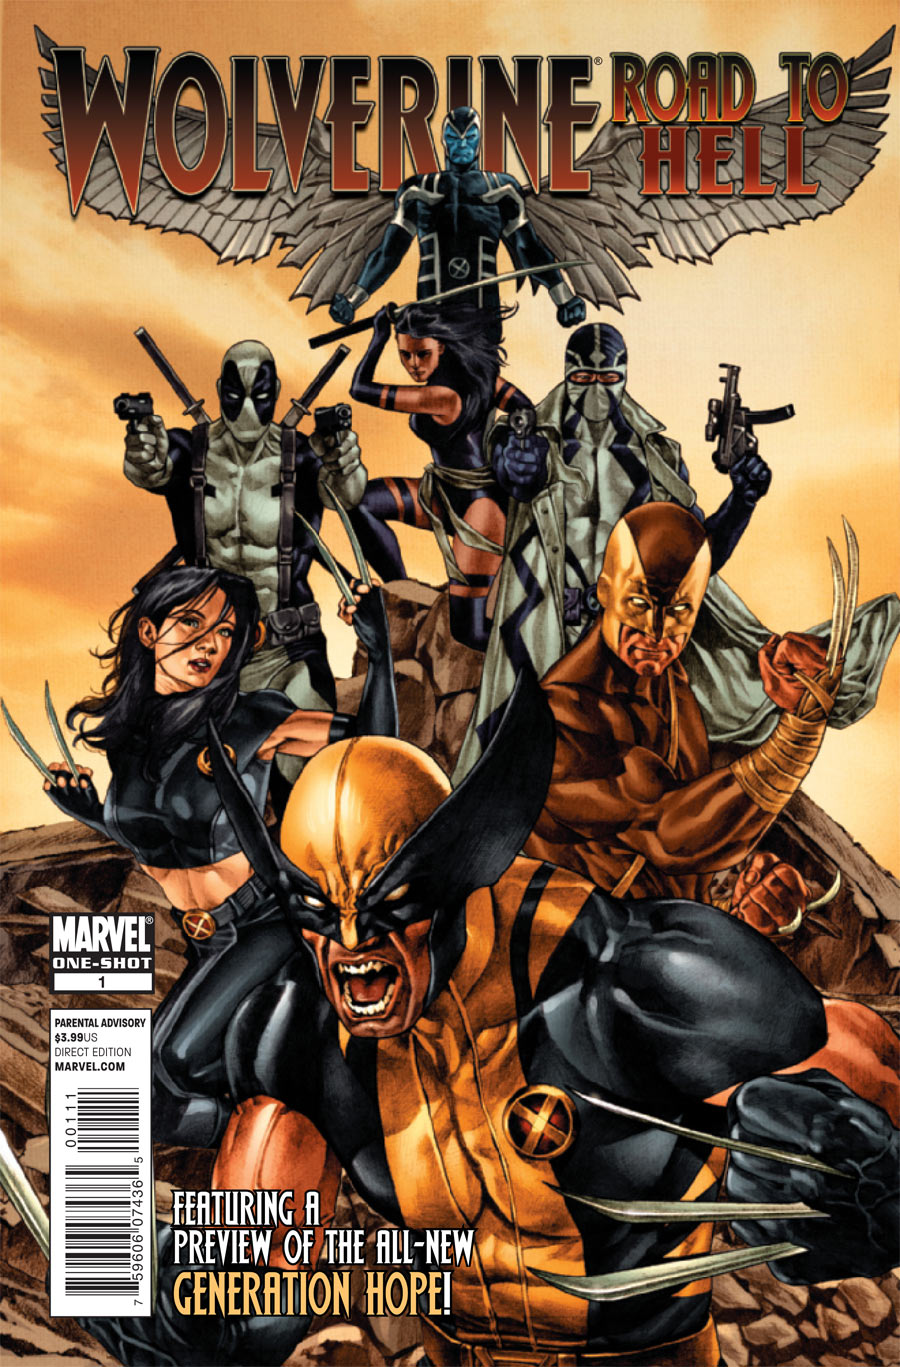 Wolverine: Road to Hell Vol 1 1 | Marvel Database | Fandom